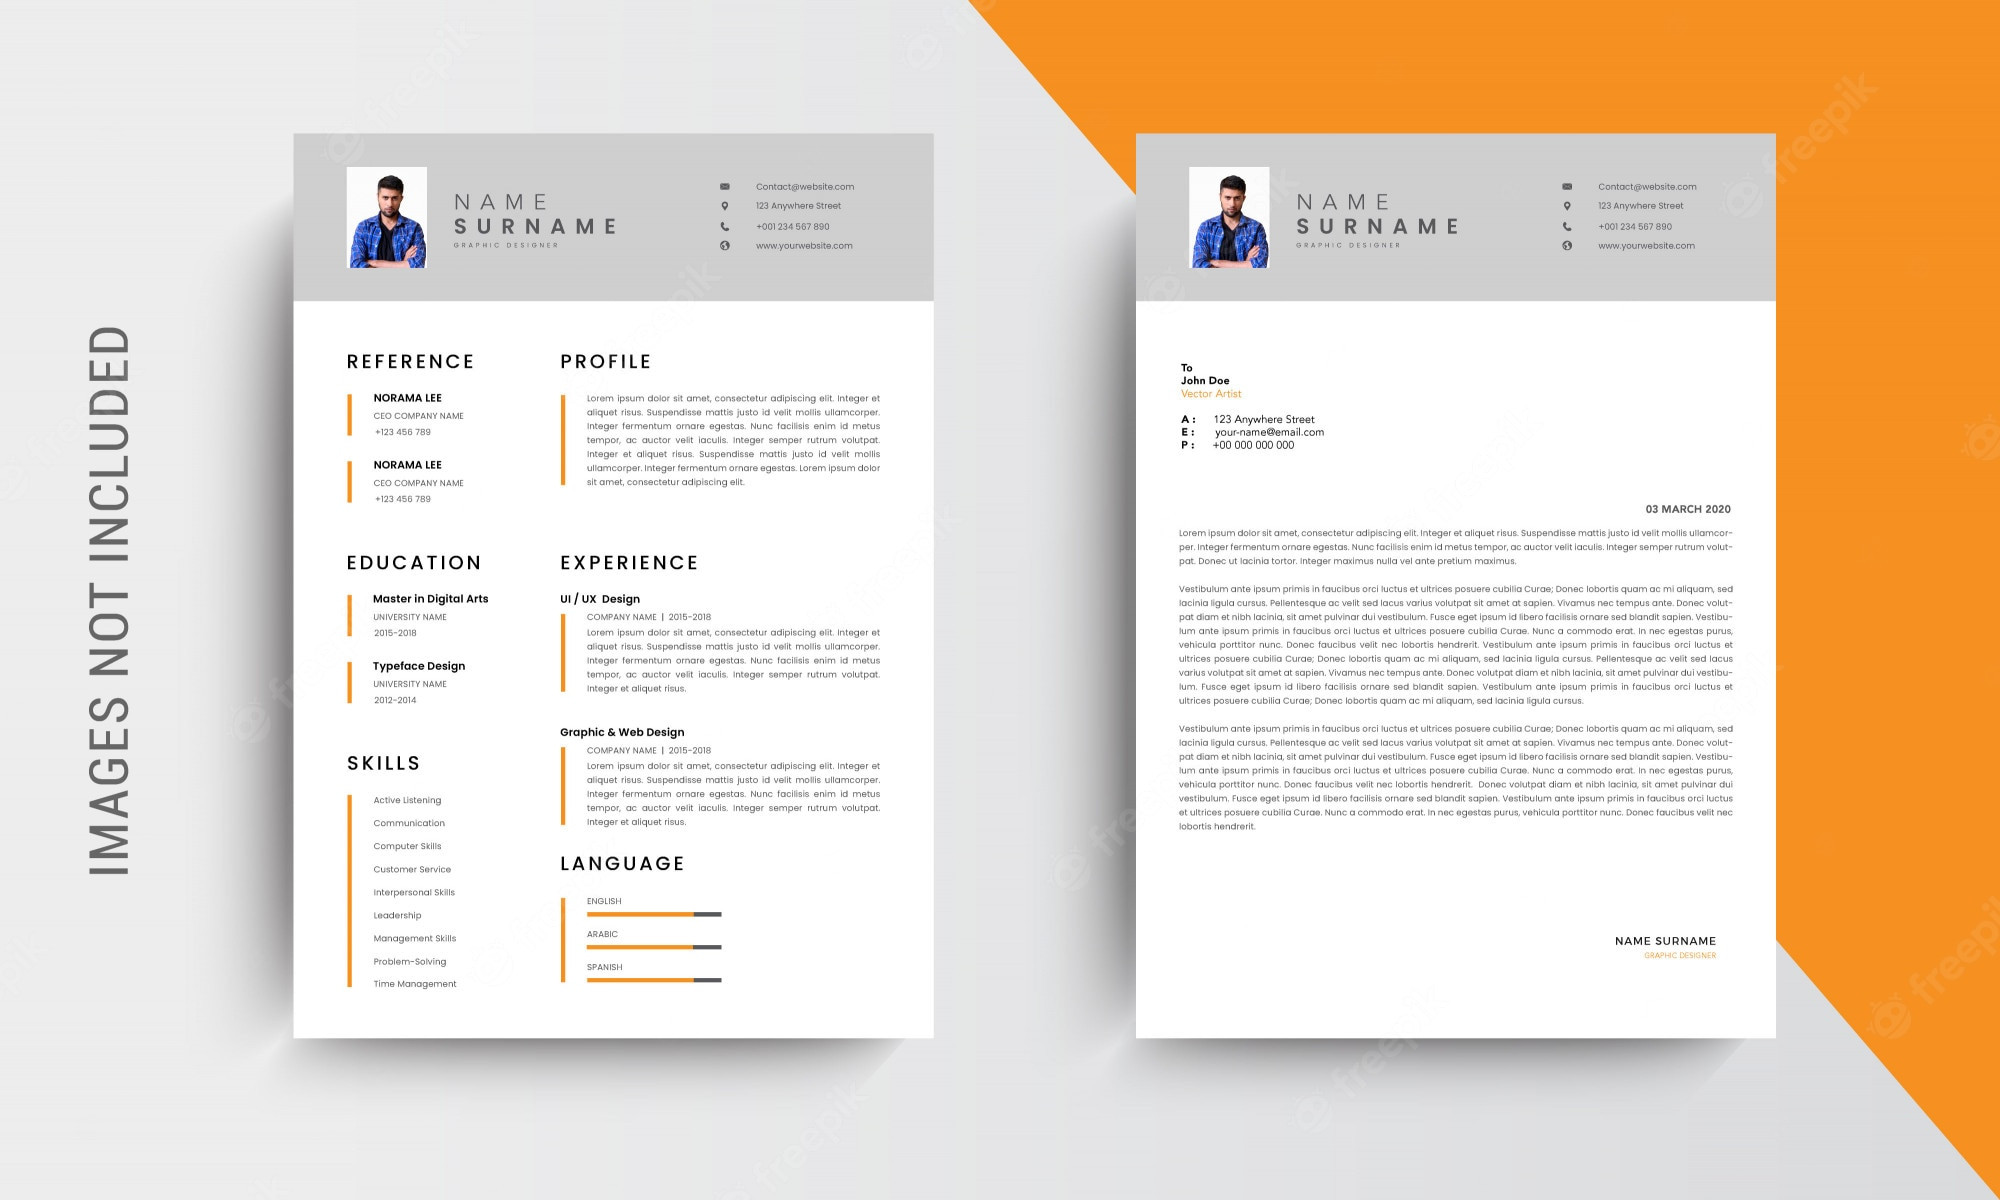 Letterhead for Resume Cover Letter Sample Premium Vector Professional Cv Resume Template Design and …